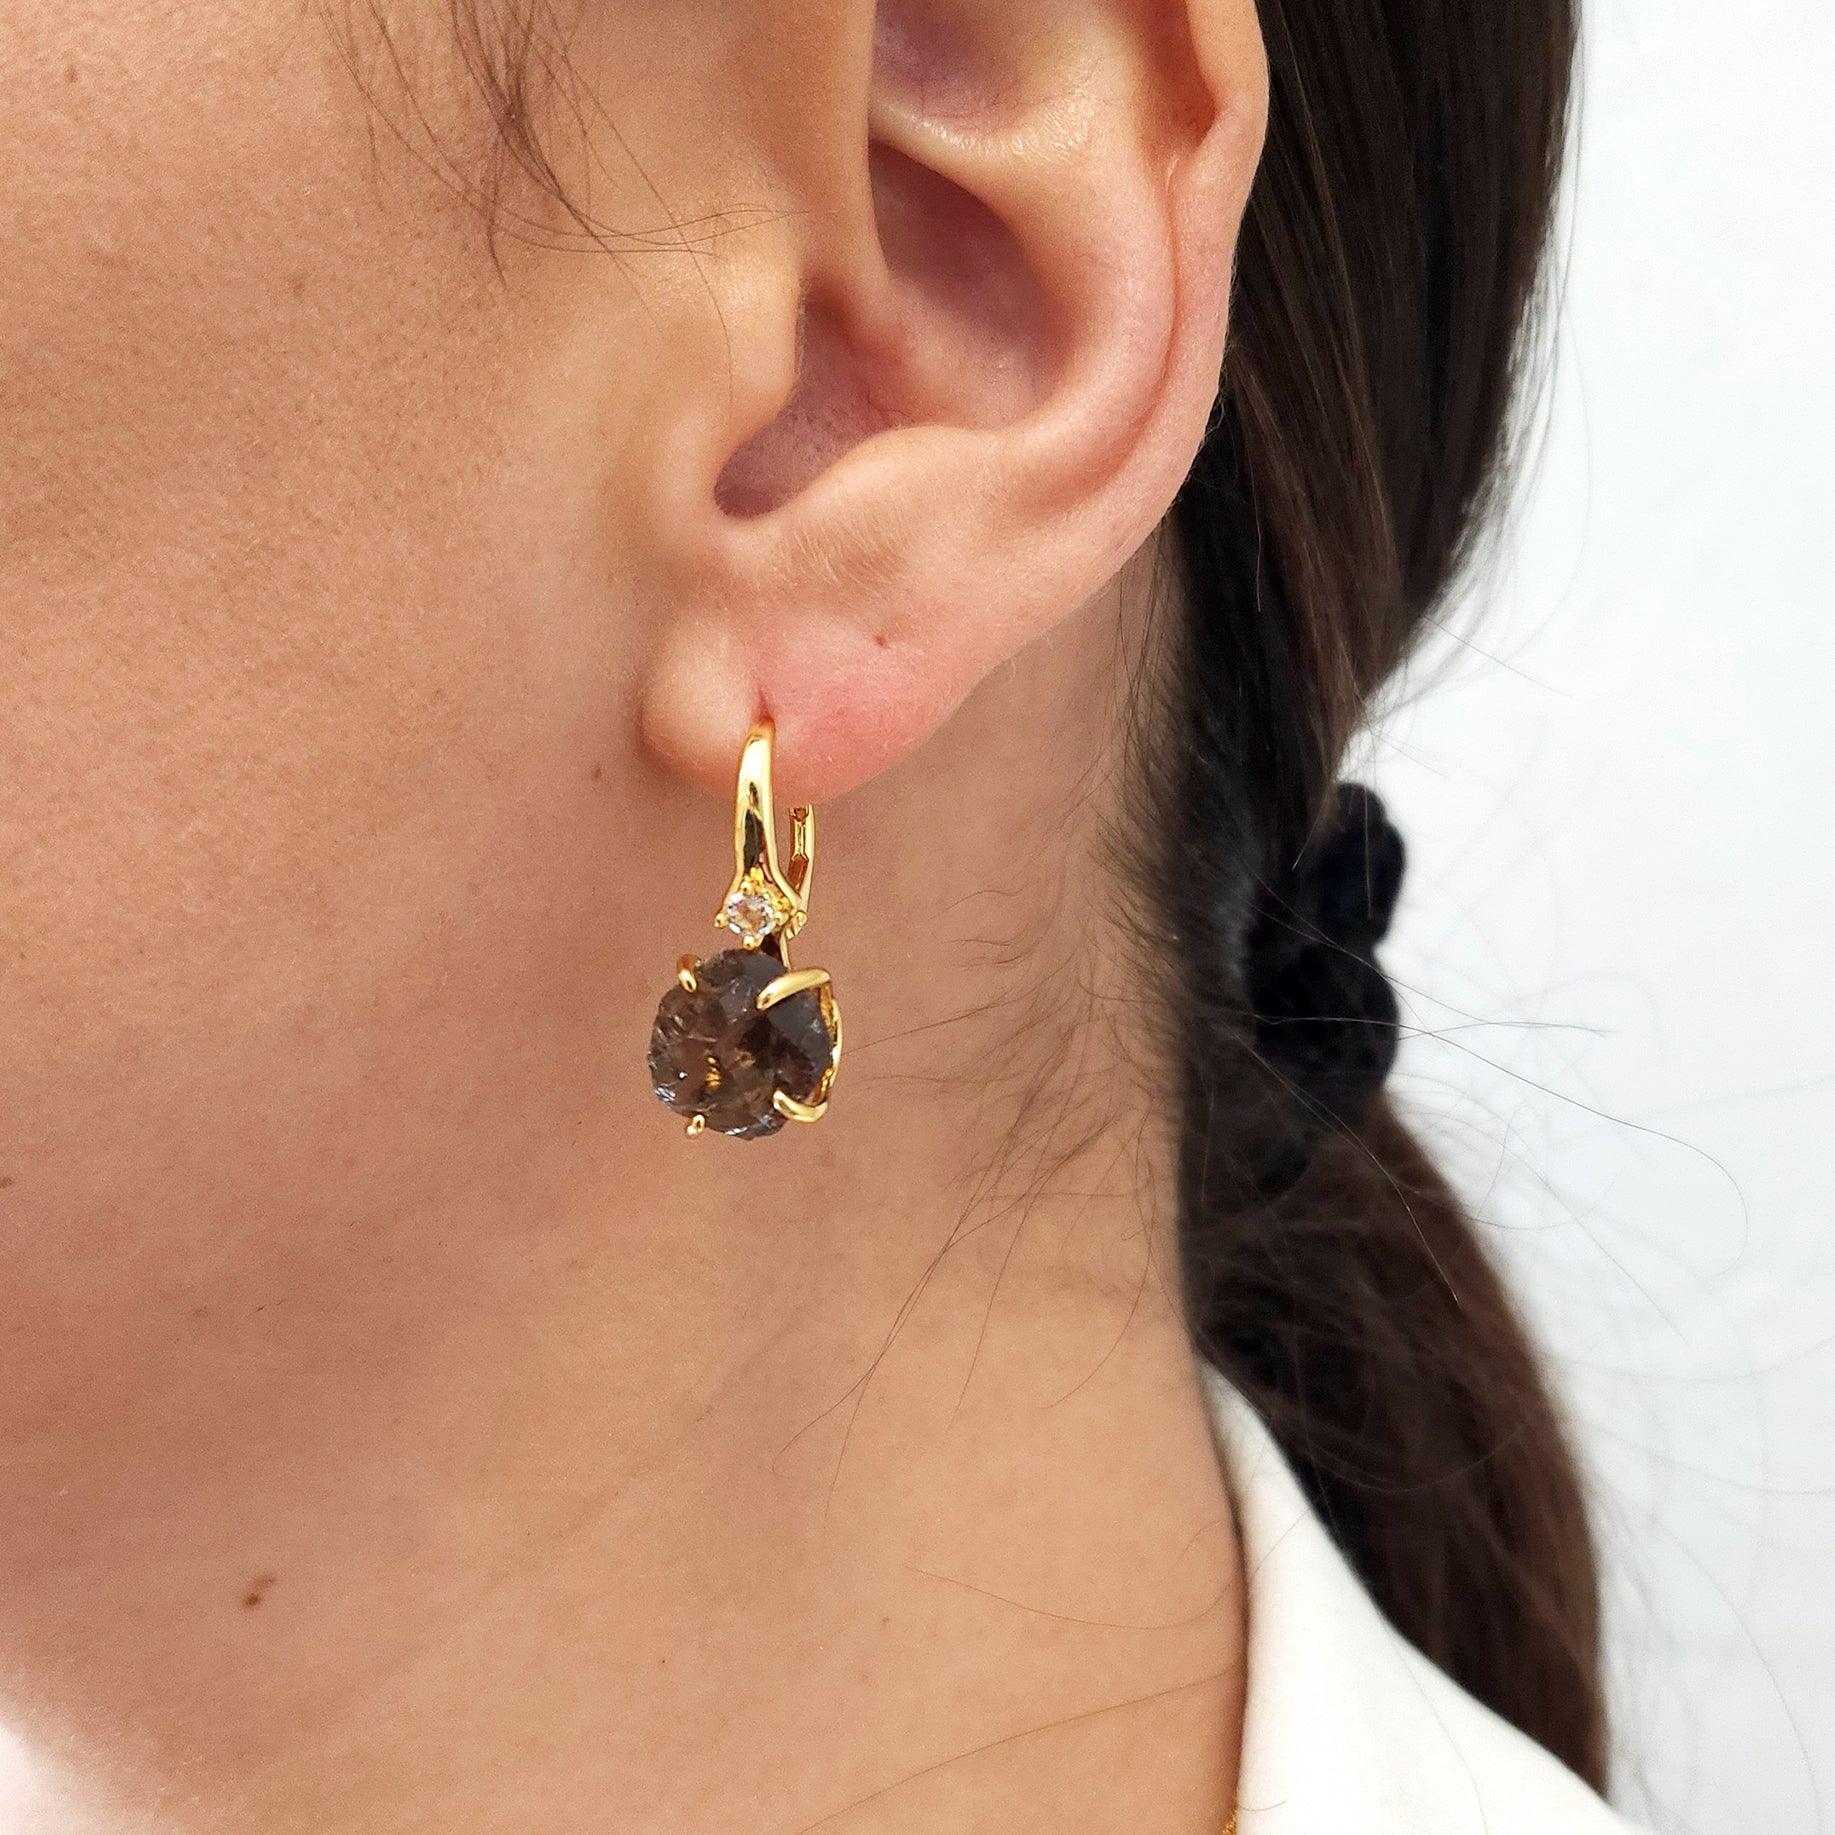 Raw Smoky Quartz Drop Earrings - Uniquelan Jewelry